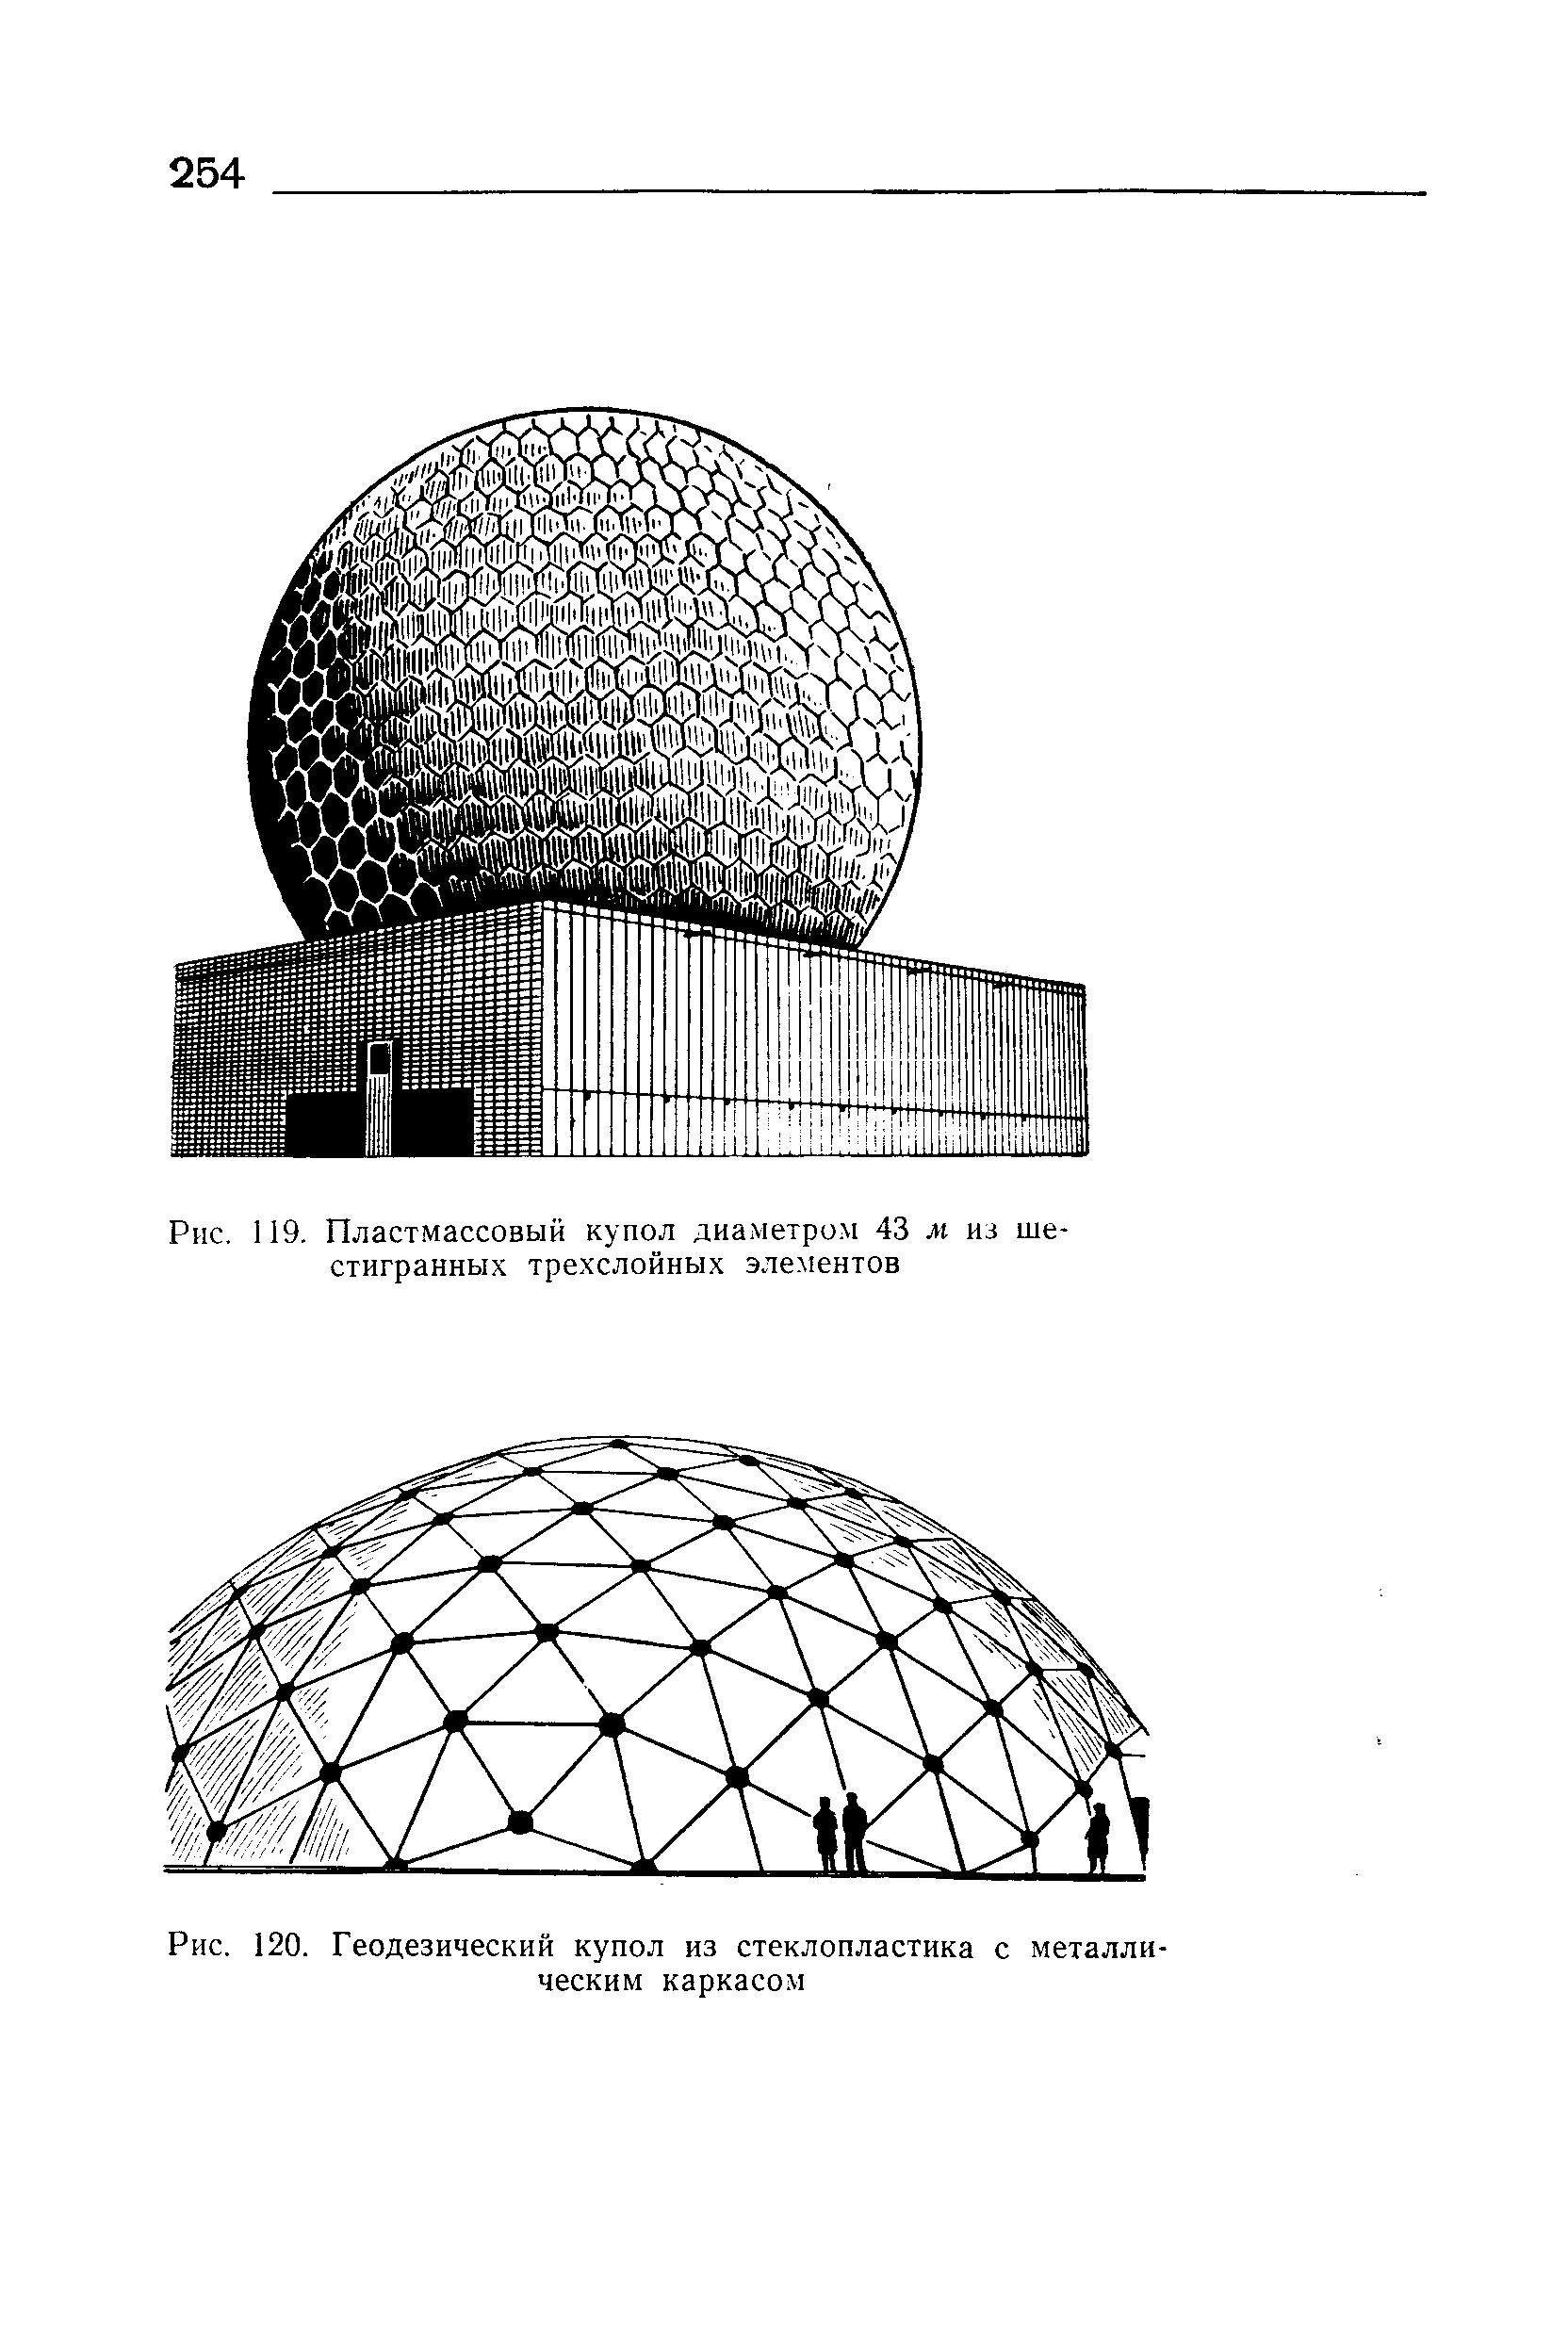 Рис. 120. Геодезический купол из стеклопластика с металлическим каркасом
